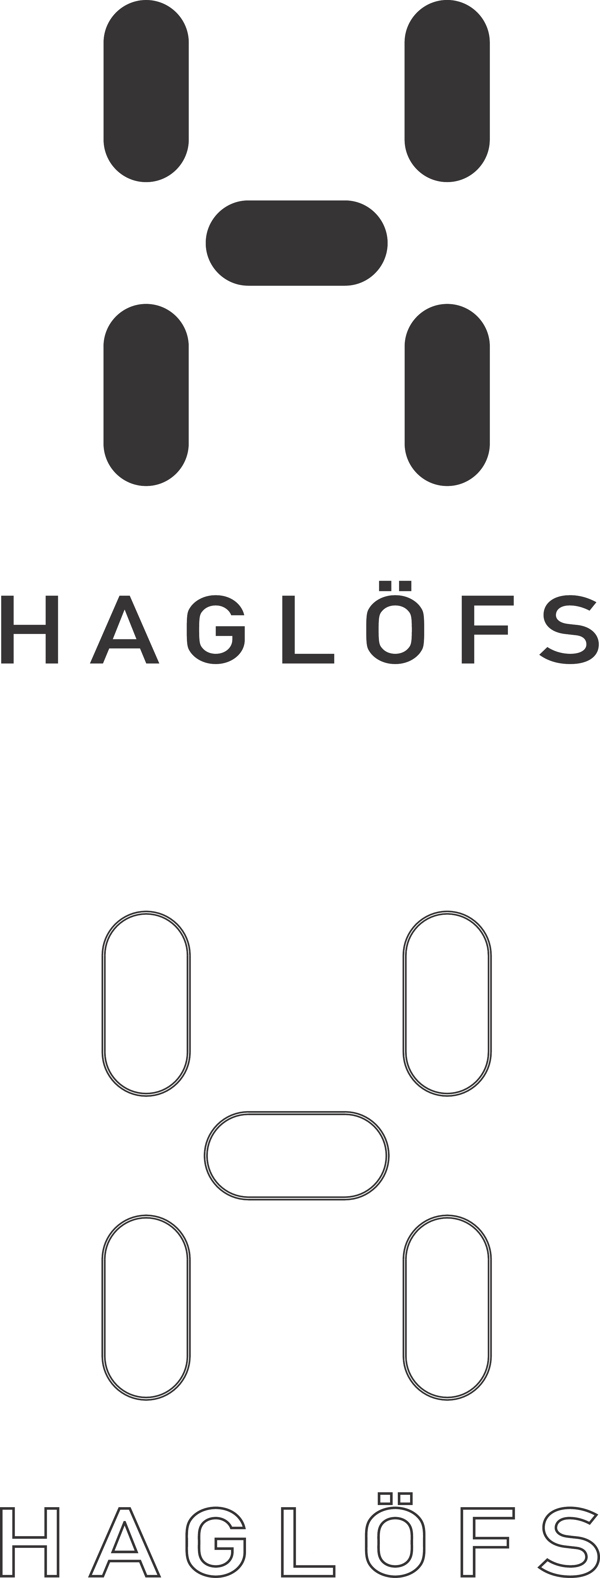 户外品牌HAGLOFS矢量logo